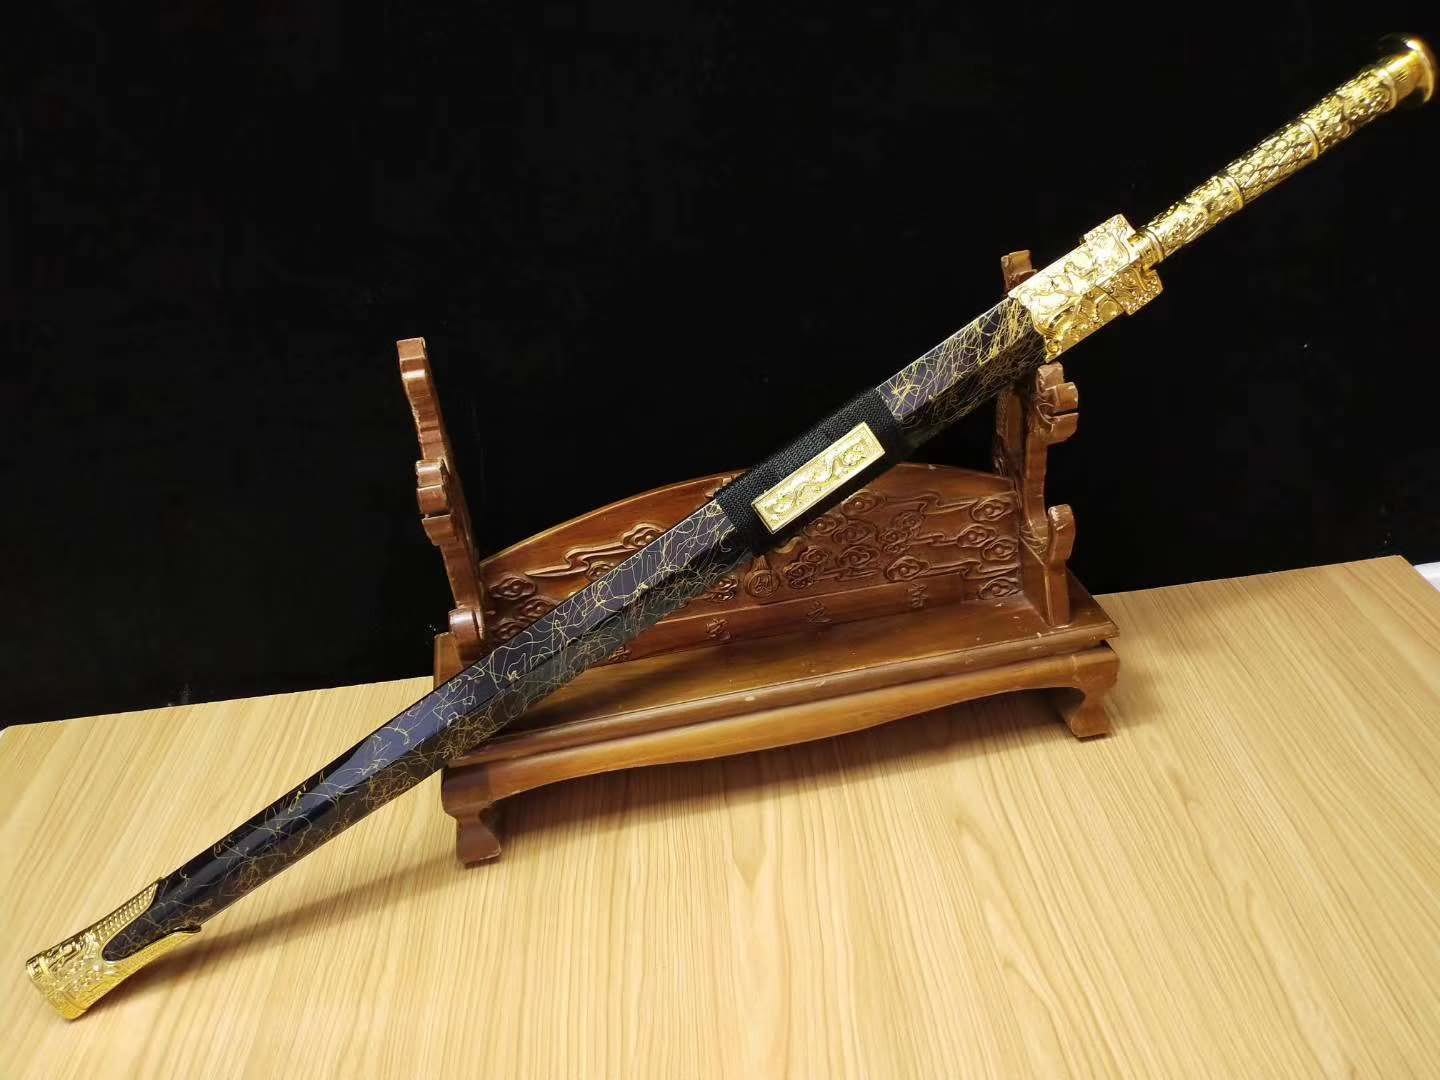 Han jian sword,Medium carbon steel etch blade,Alloy fittings-Kung fu - Chinese sword shop